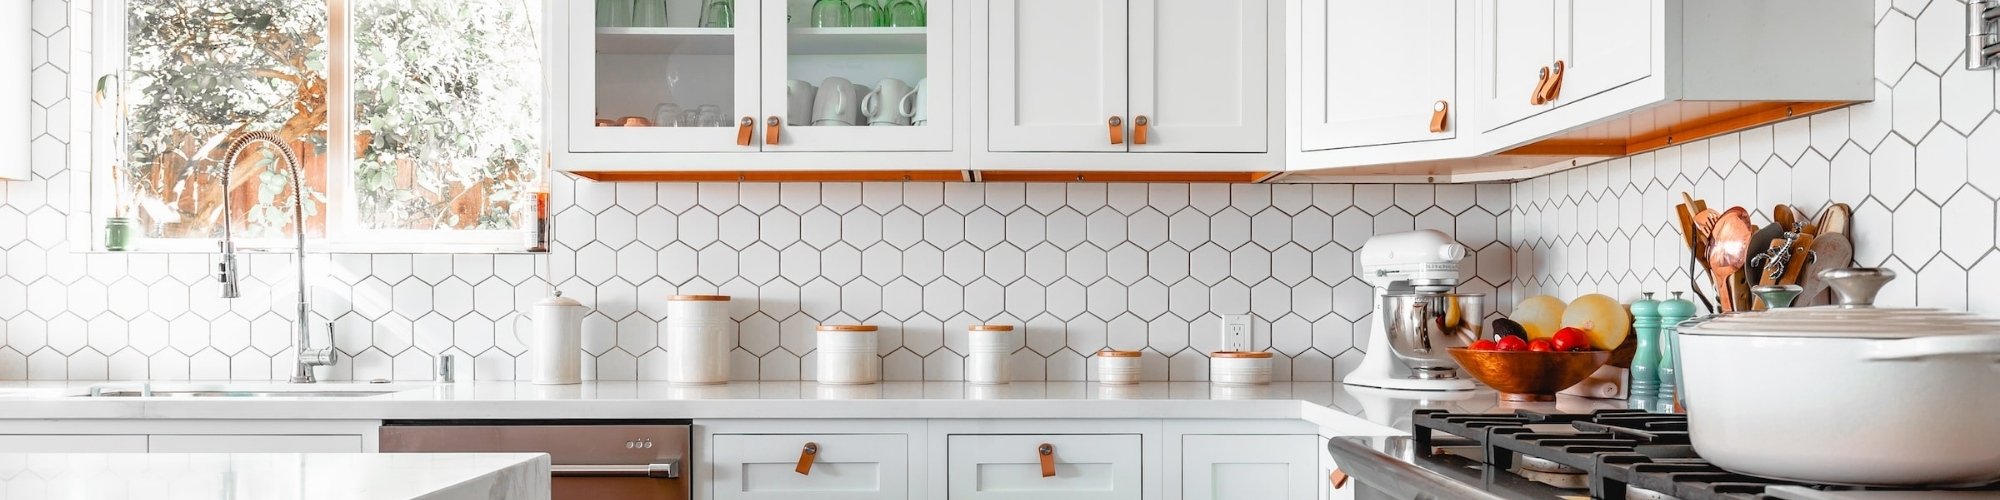 Modern white tile backsplash in a bright and open kitchen